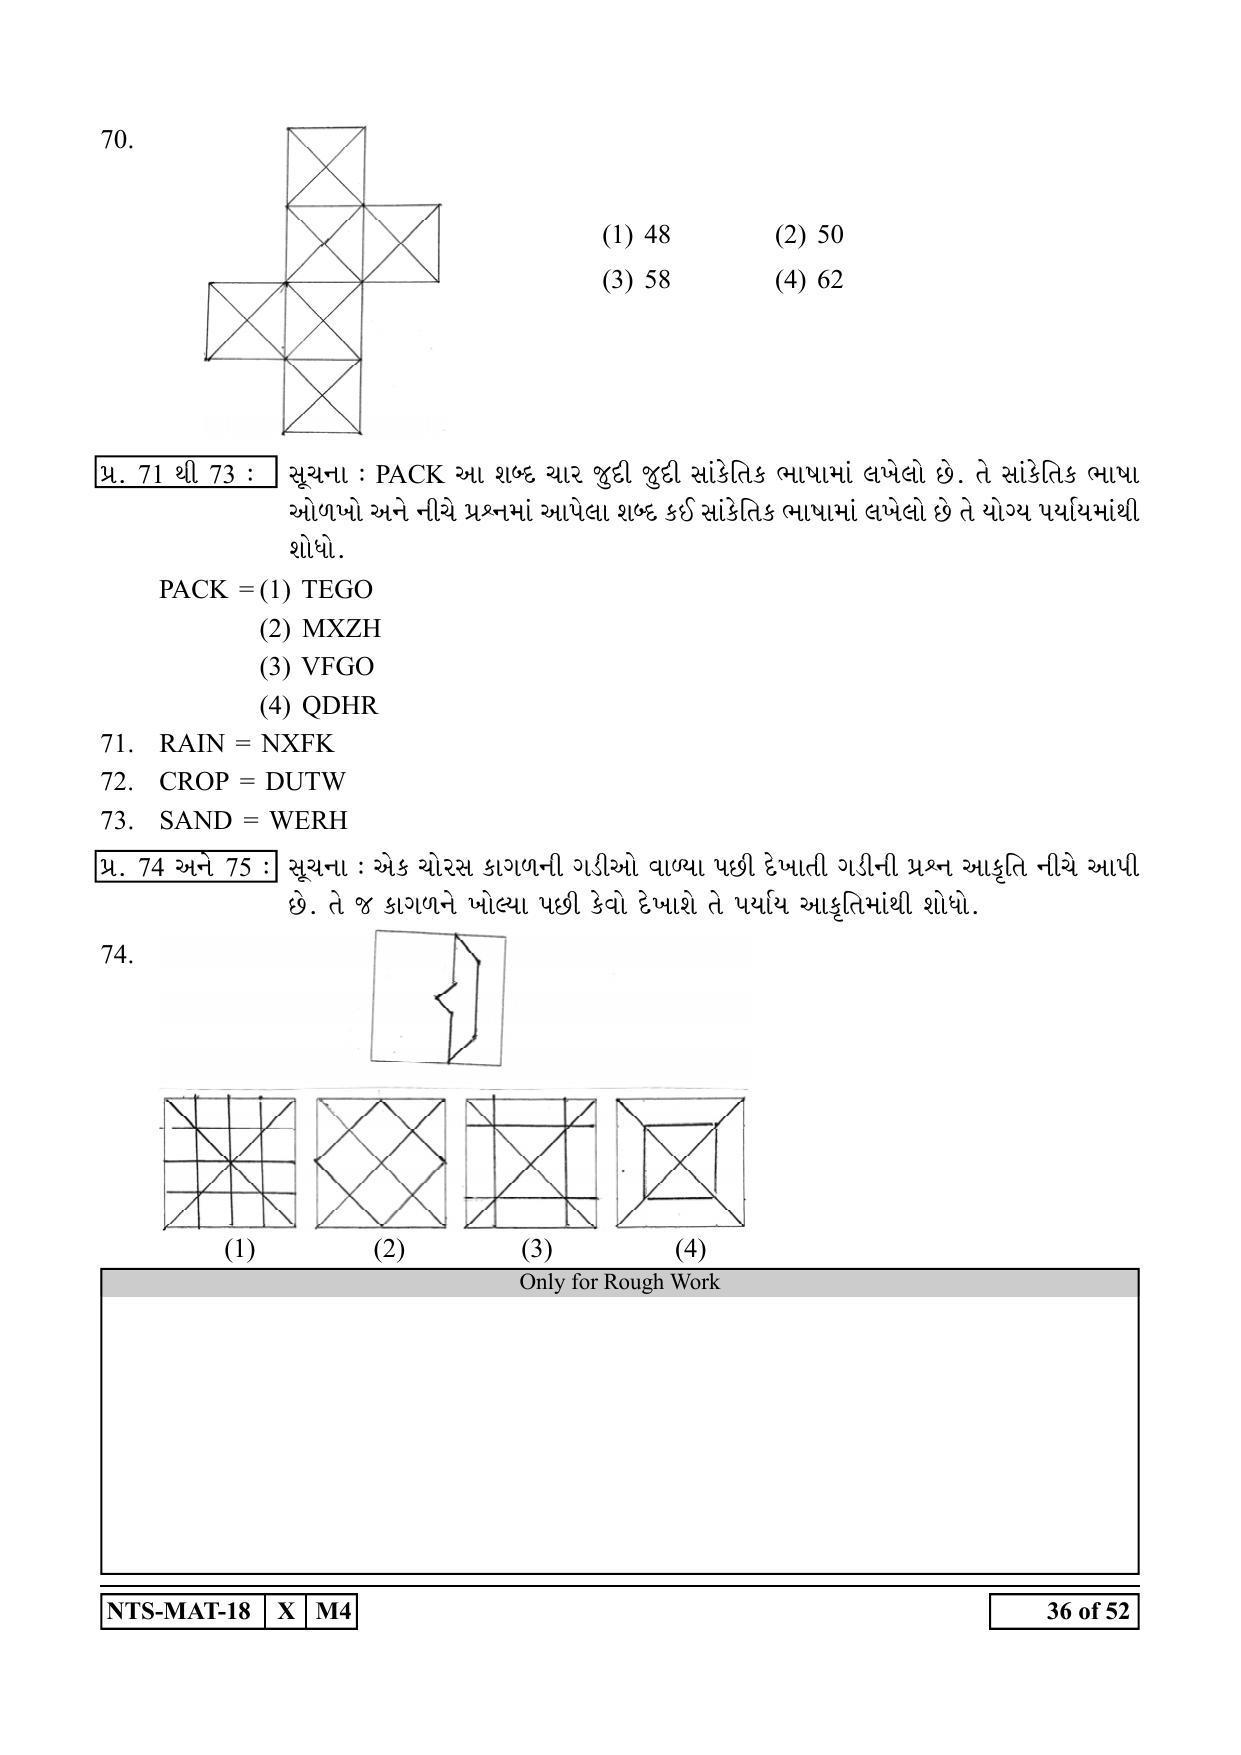 Maharashtra NTSE 2019 MAT (Gujrati) Question Paper - Page 36